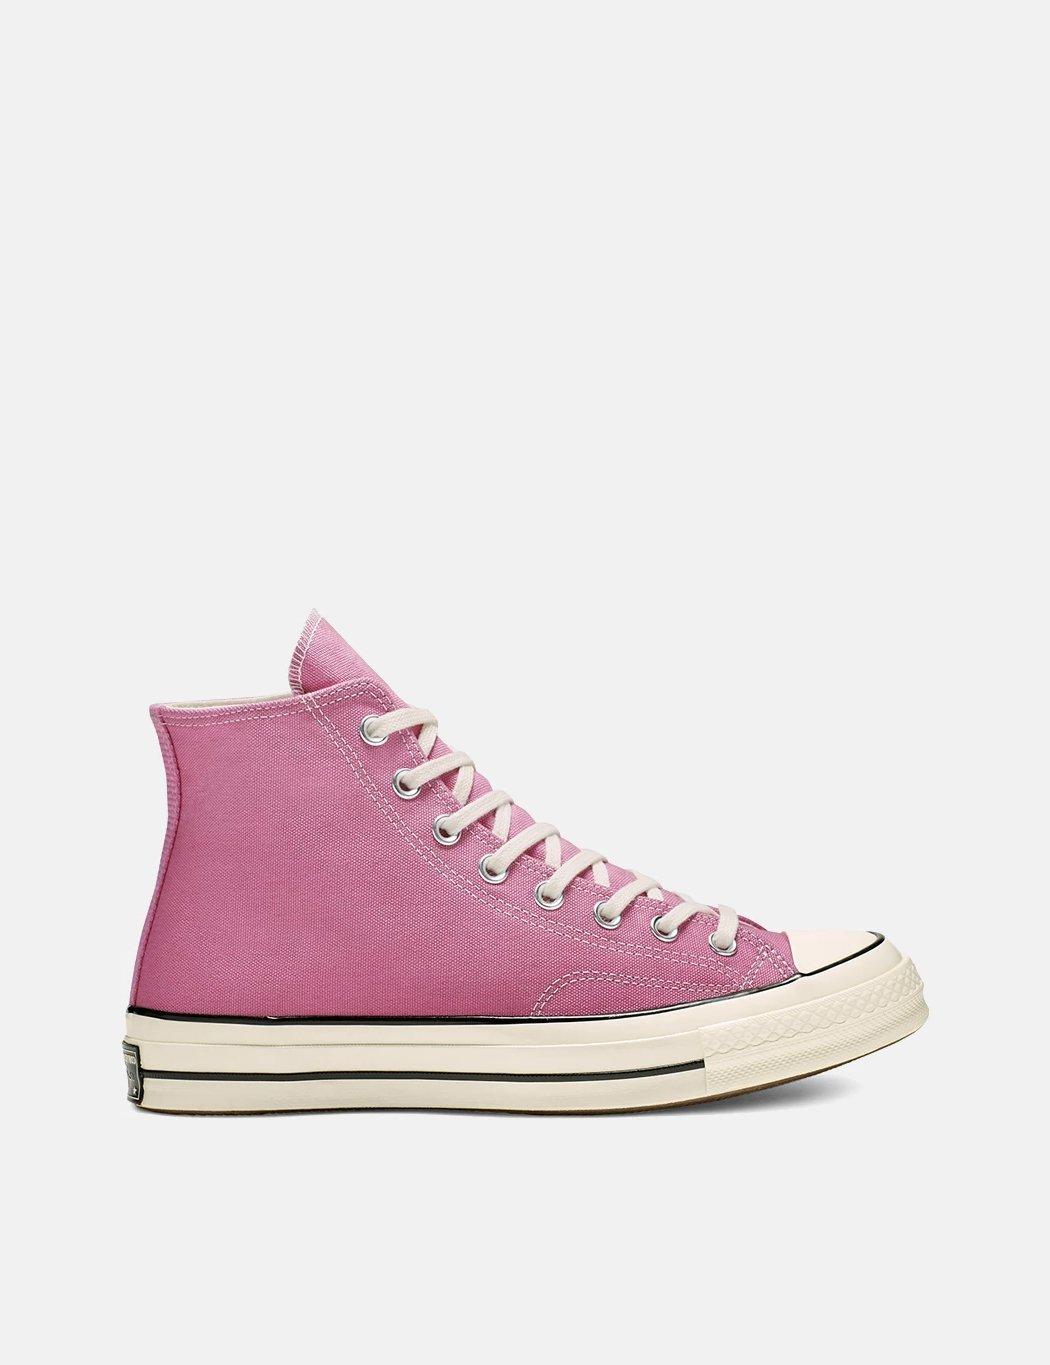 converse 1970s pink